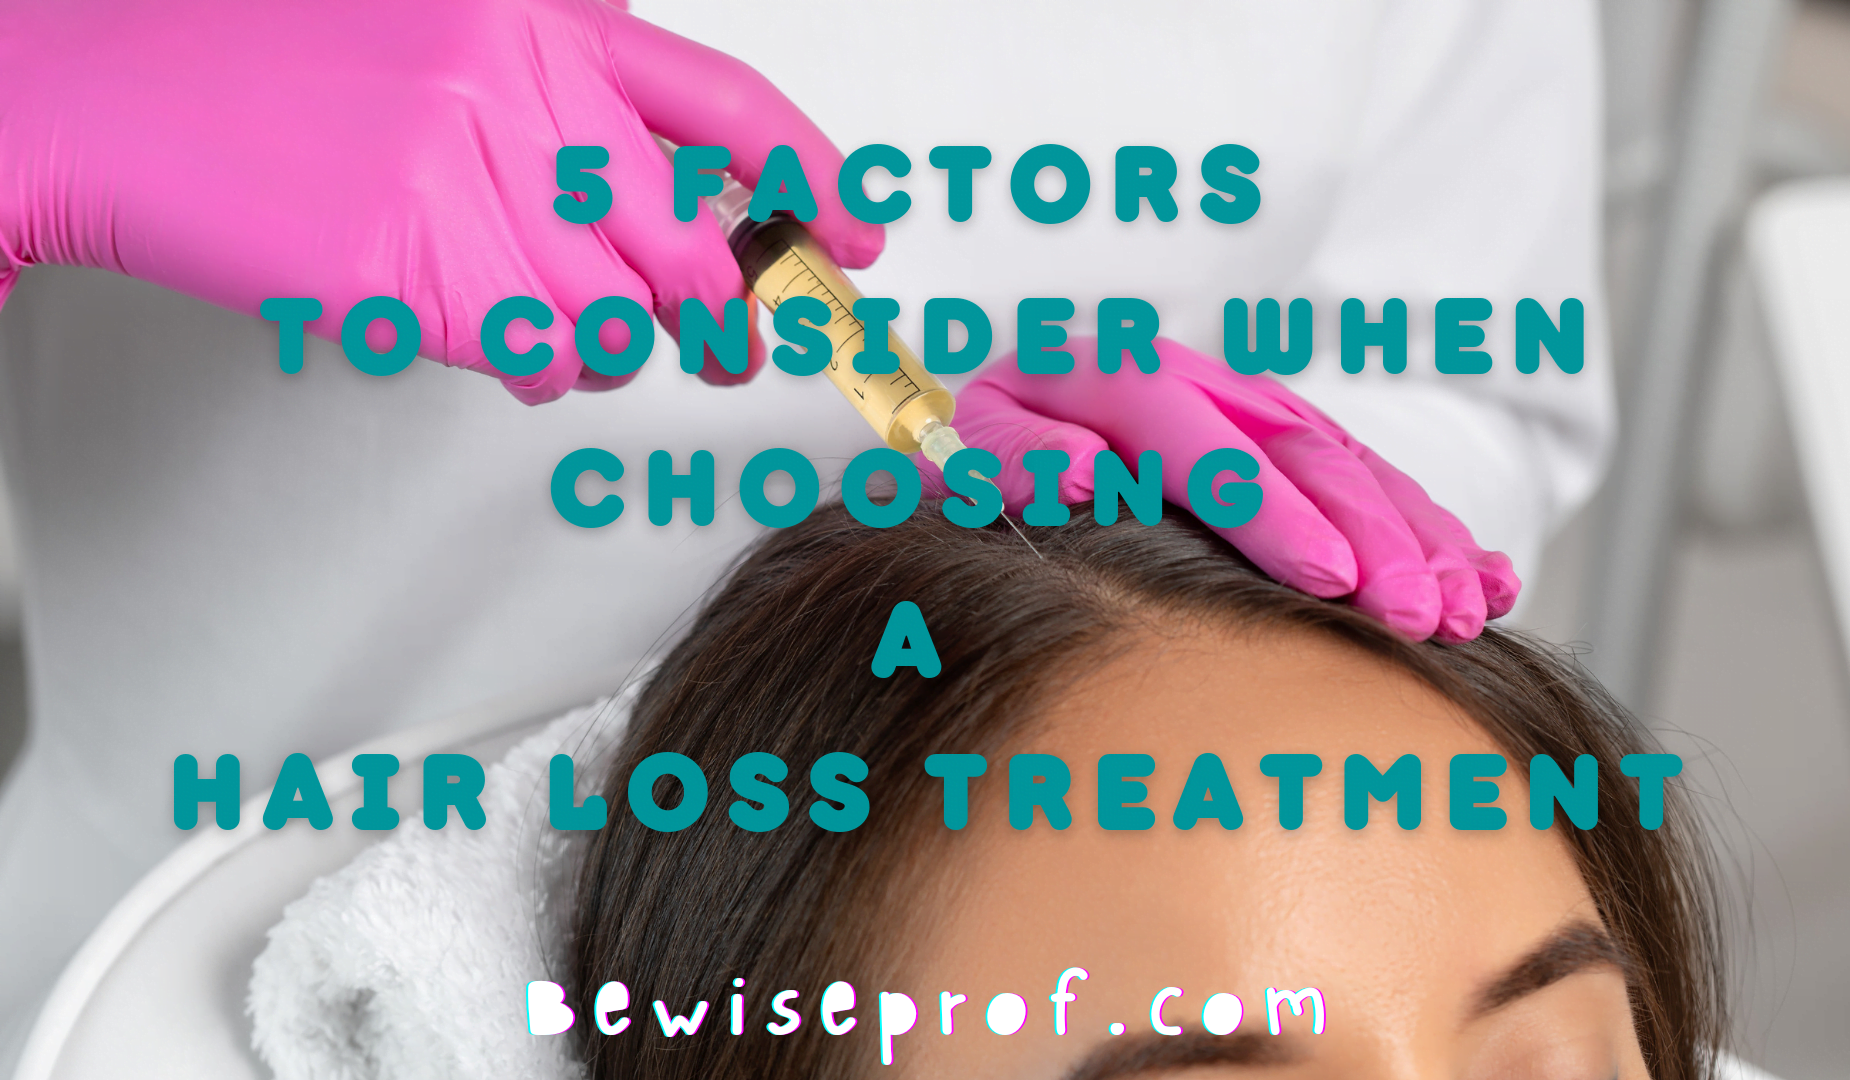 5 Factors To Consider When Choosing A Hair Loss Treatment